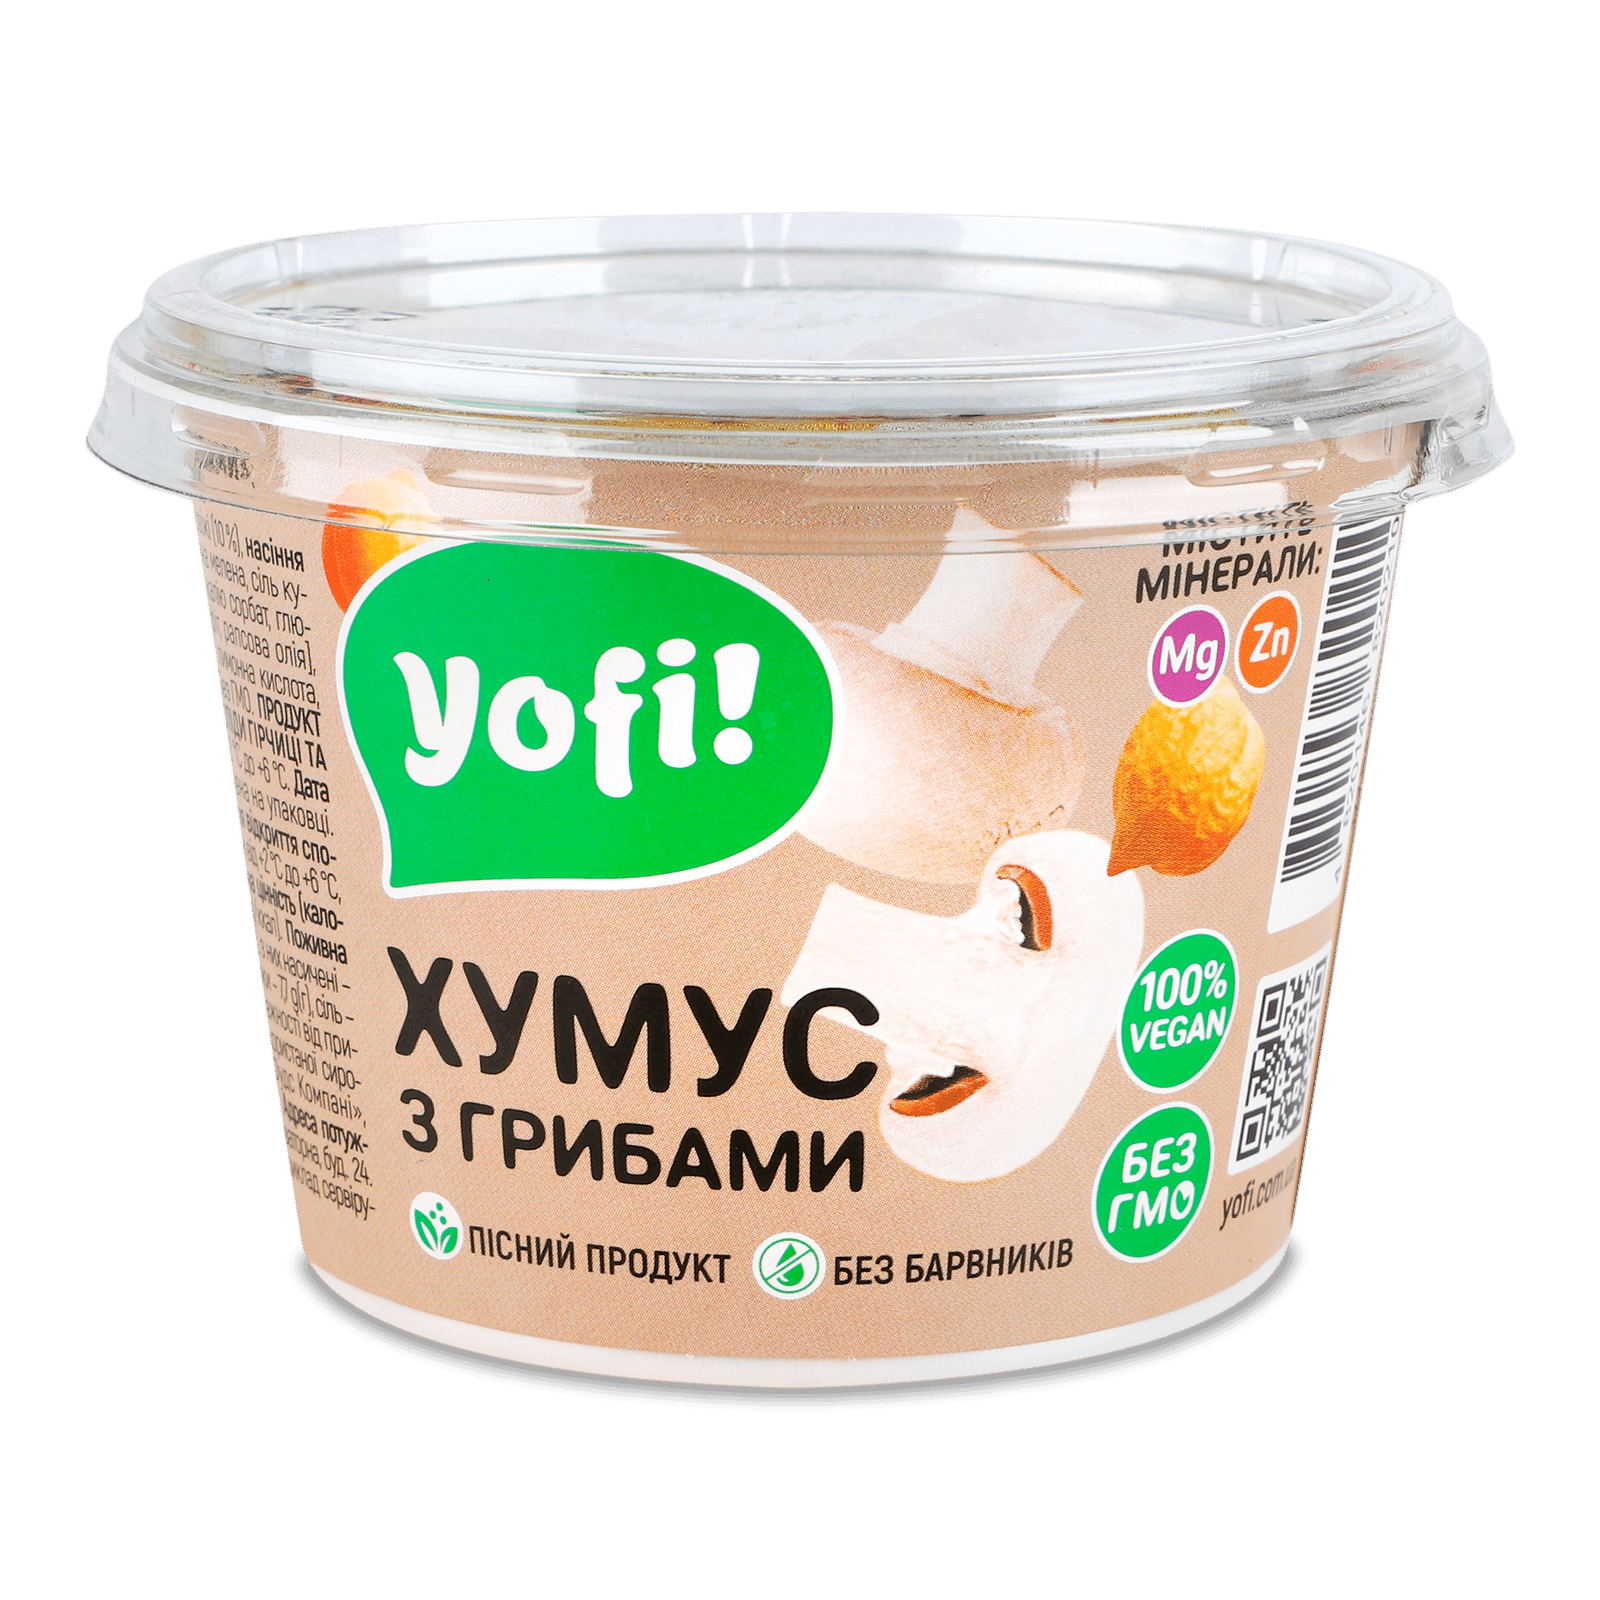 Хумус Yofi! з бобових з грибами - 1